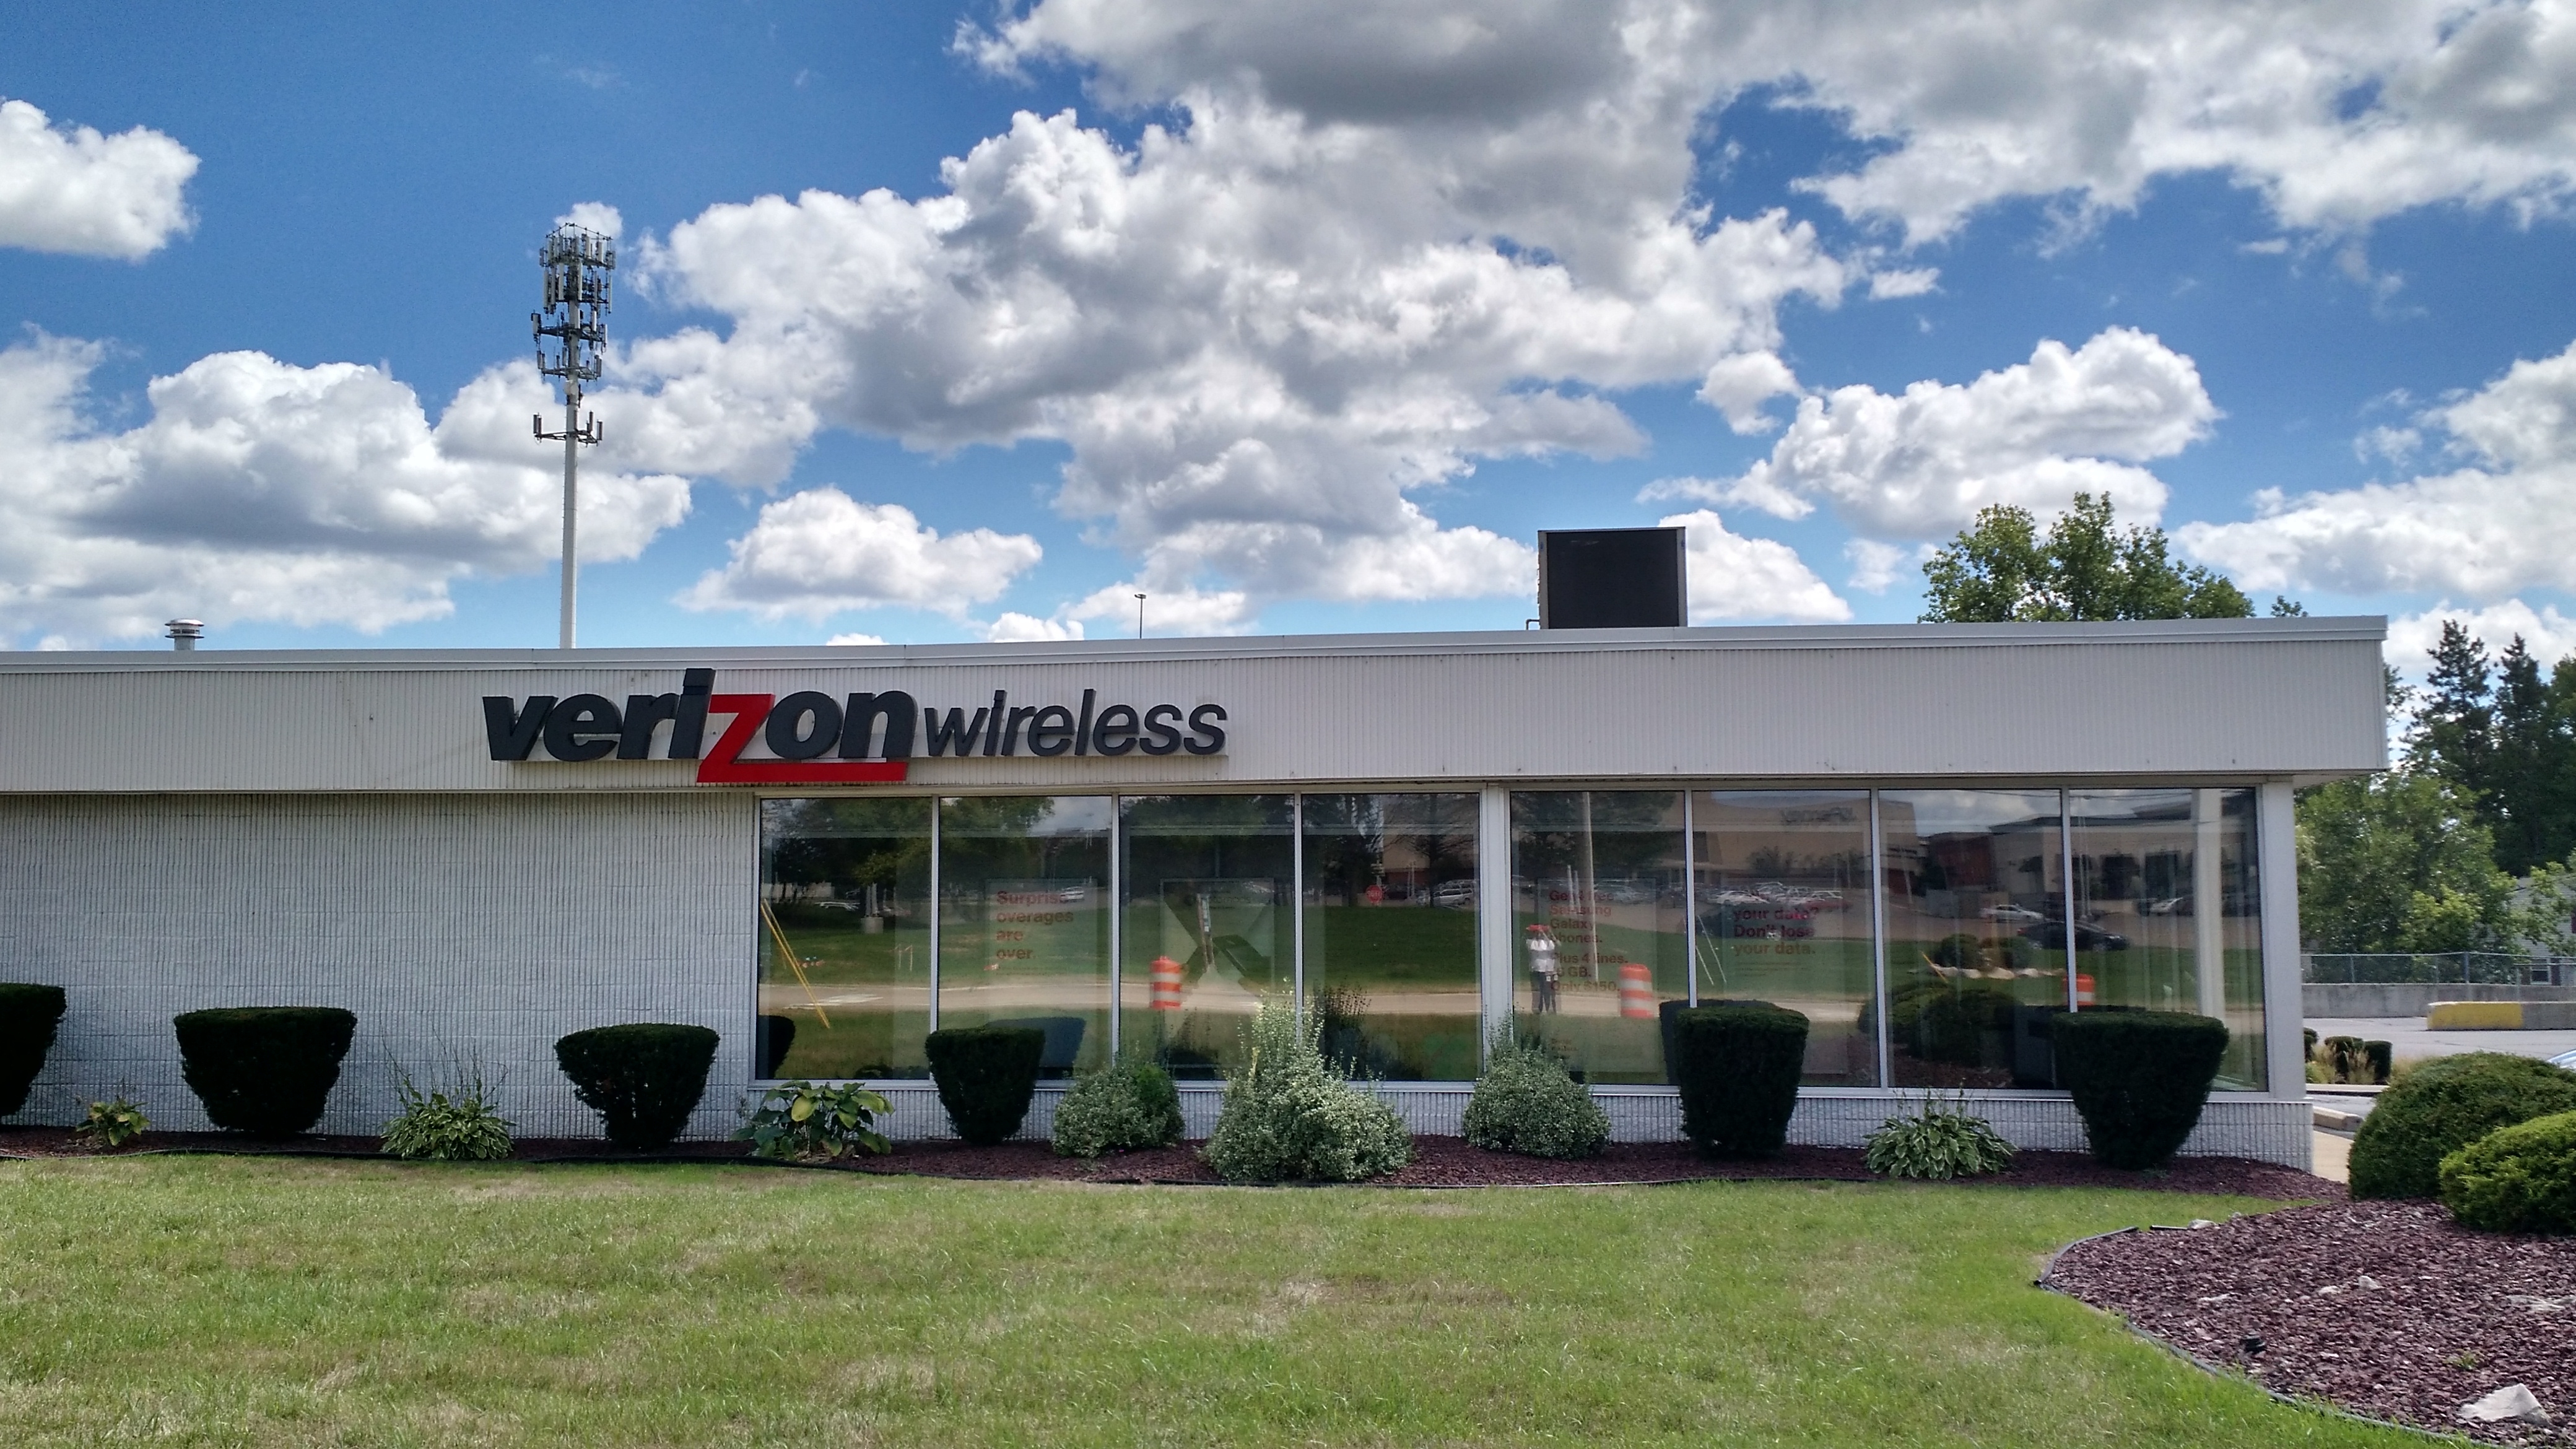 Verizon Coupons near me in Flint | 8coupons